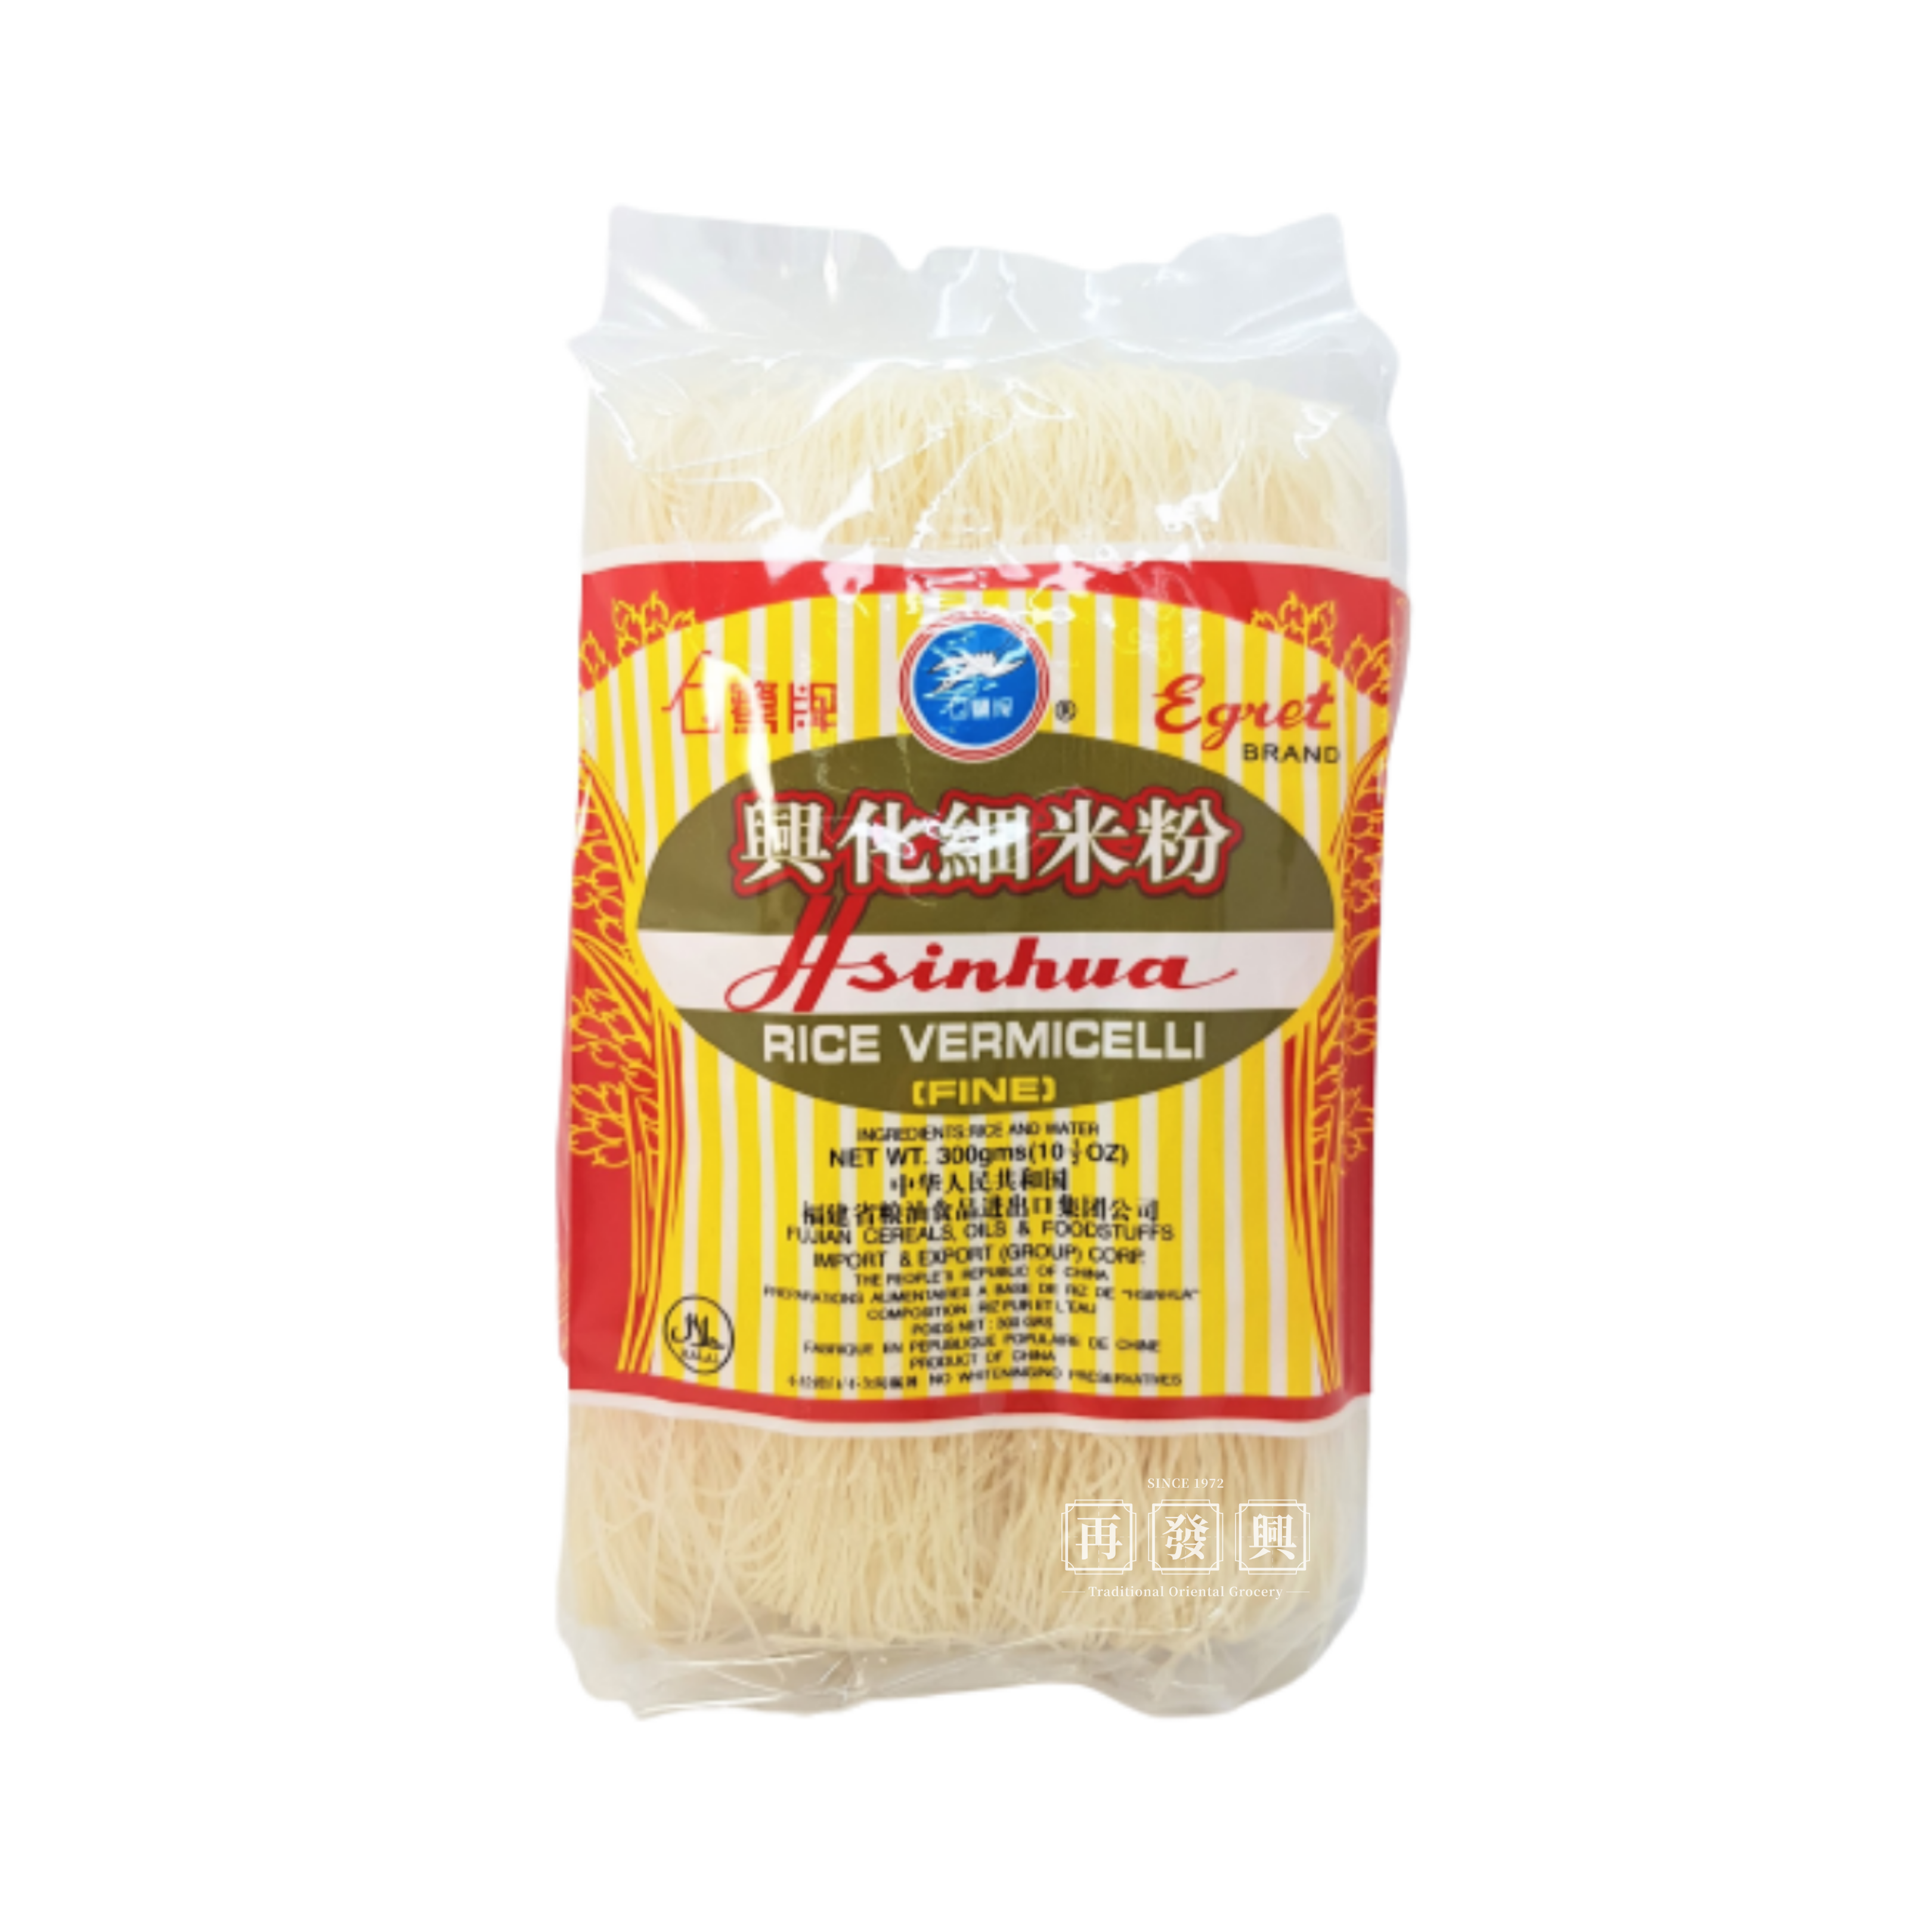 Xing Hua Rice Vermicelli 300g